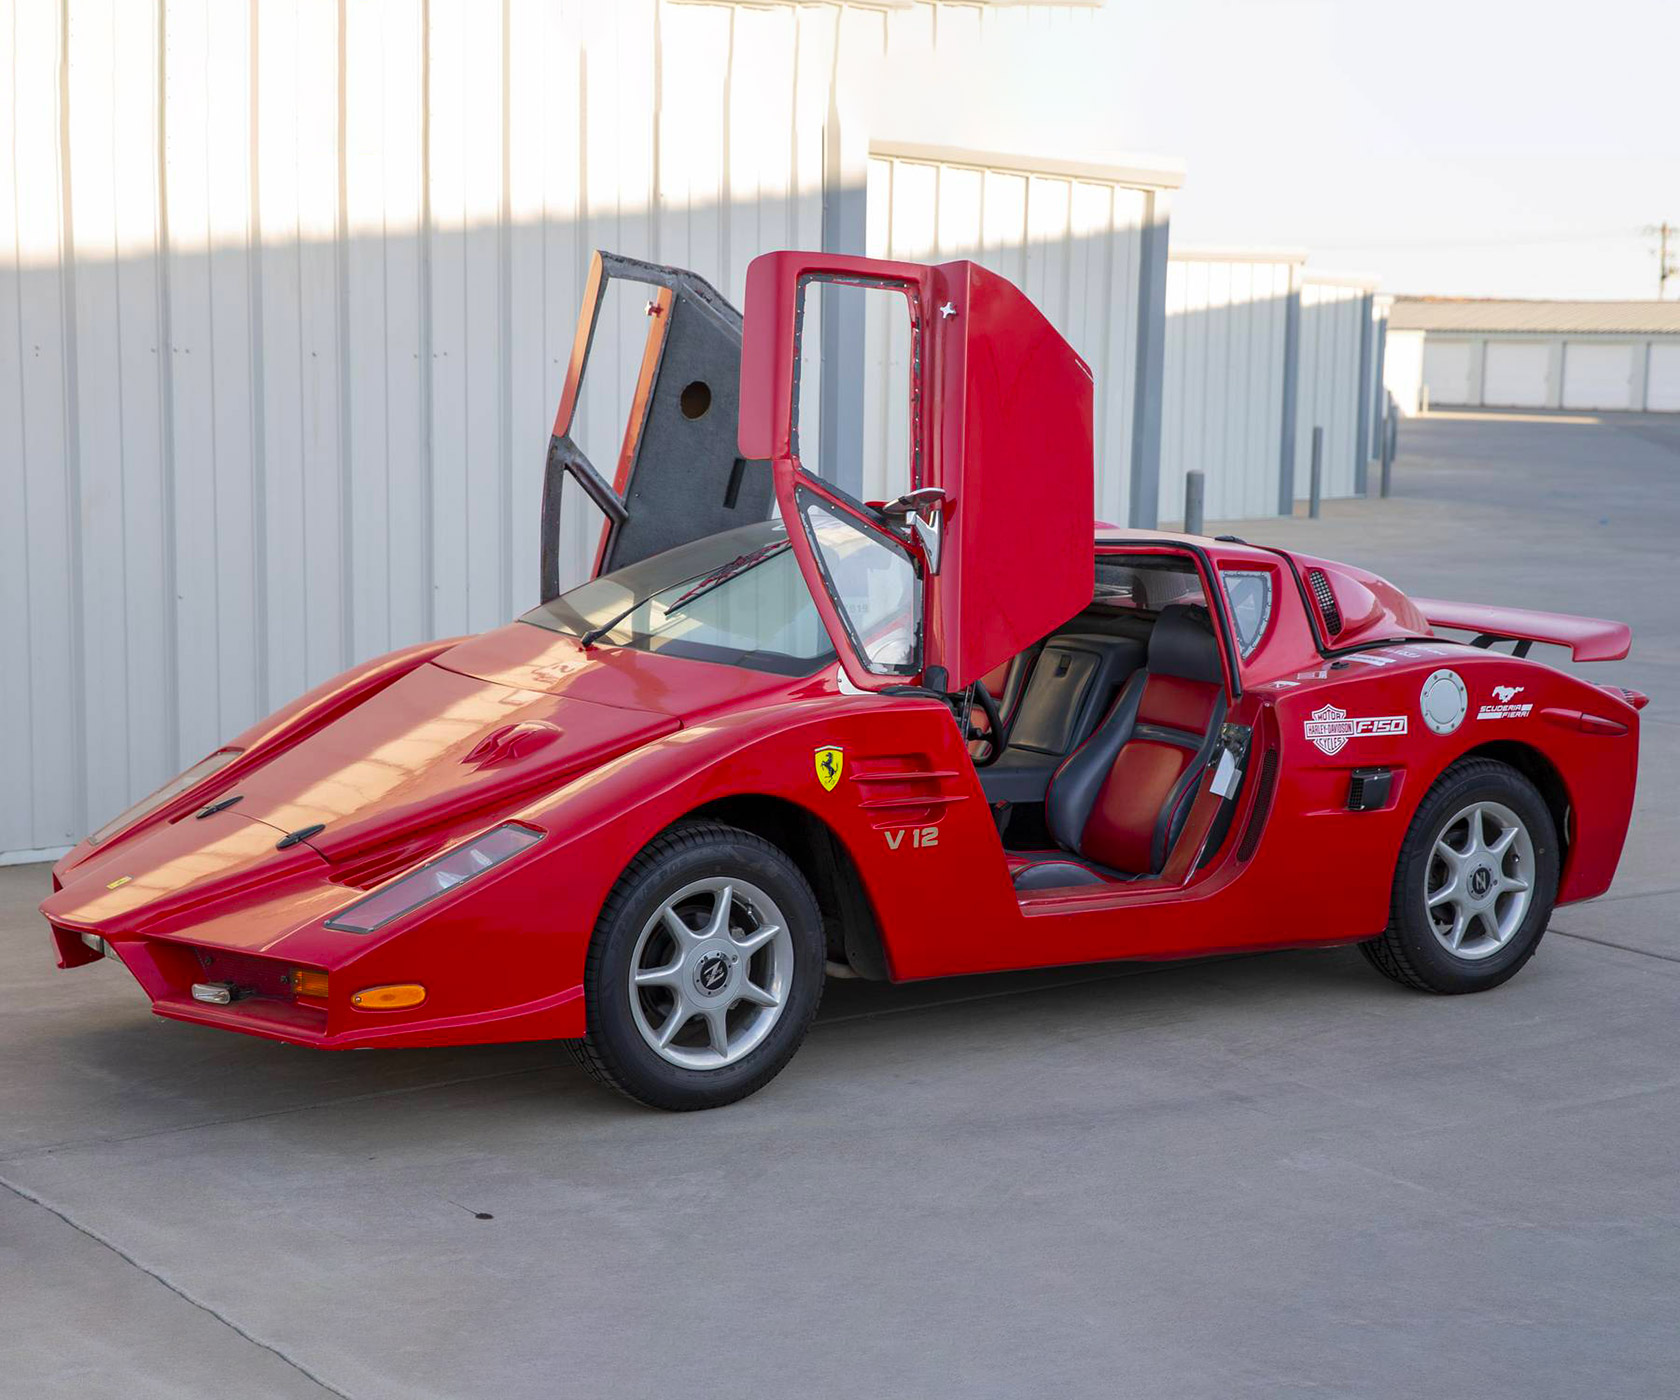 Pontiac Fierro Enzo Ferrari Replica